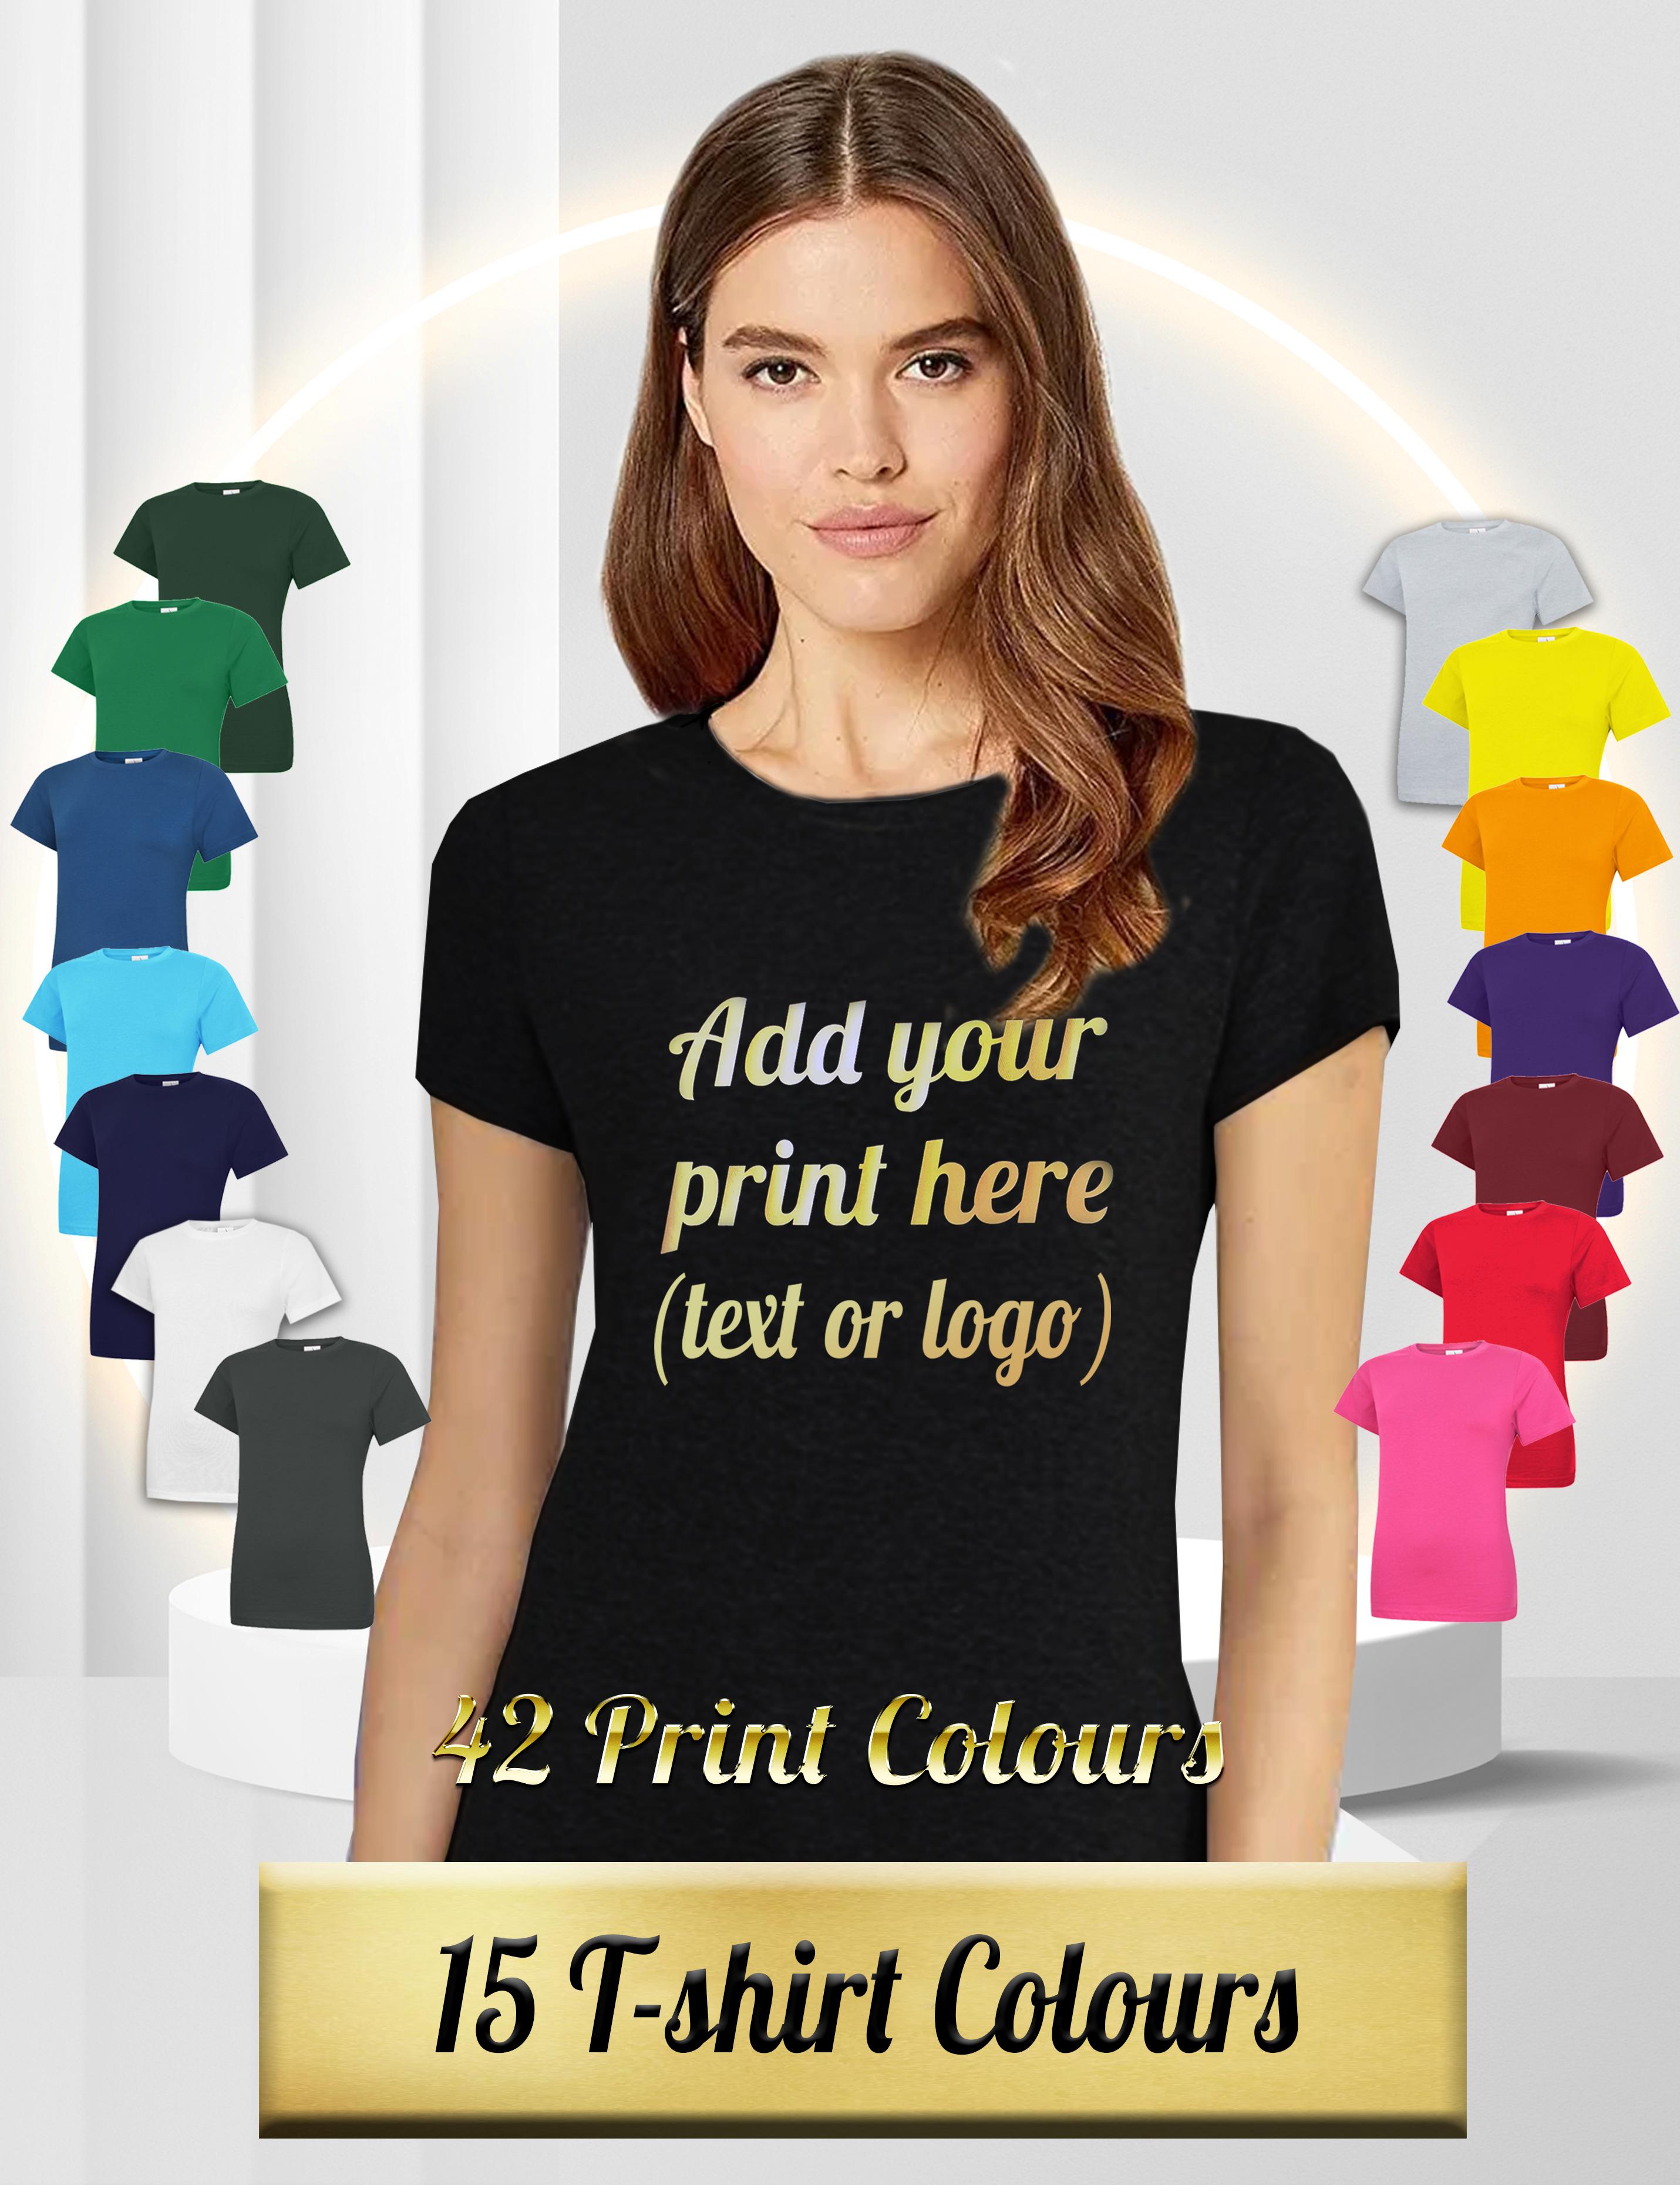 Personalised women's t-shirt printed